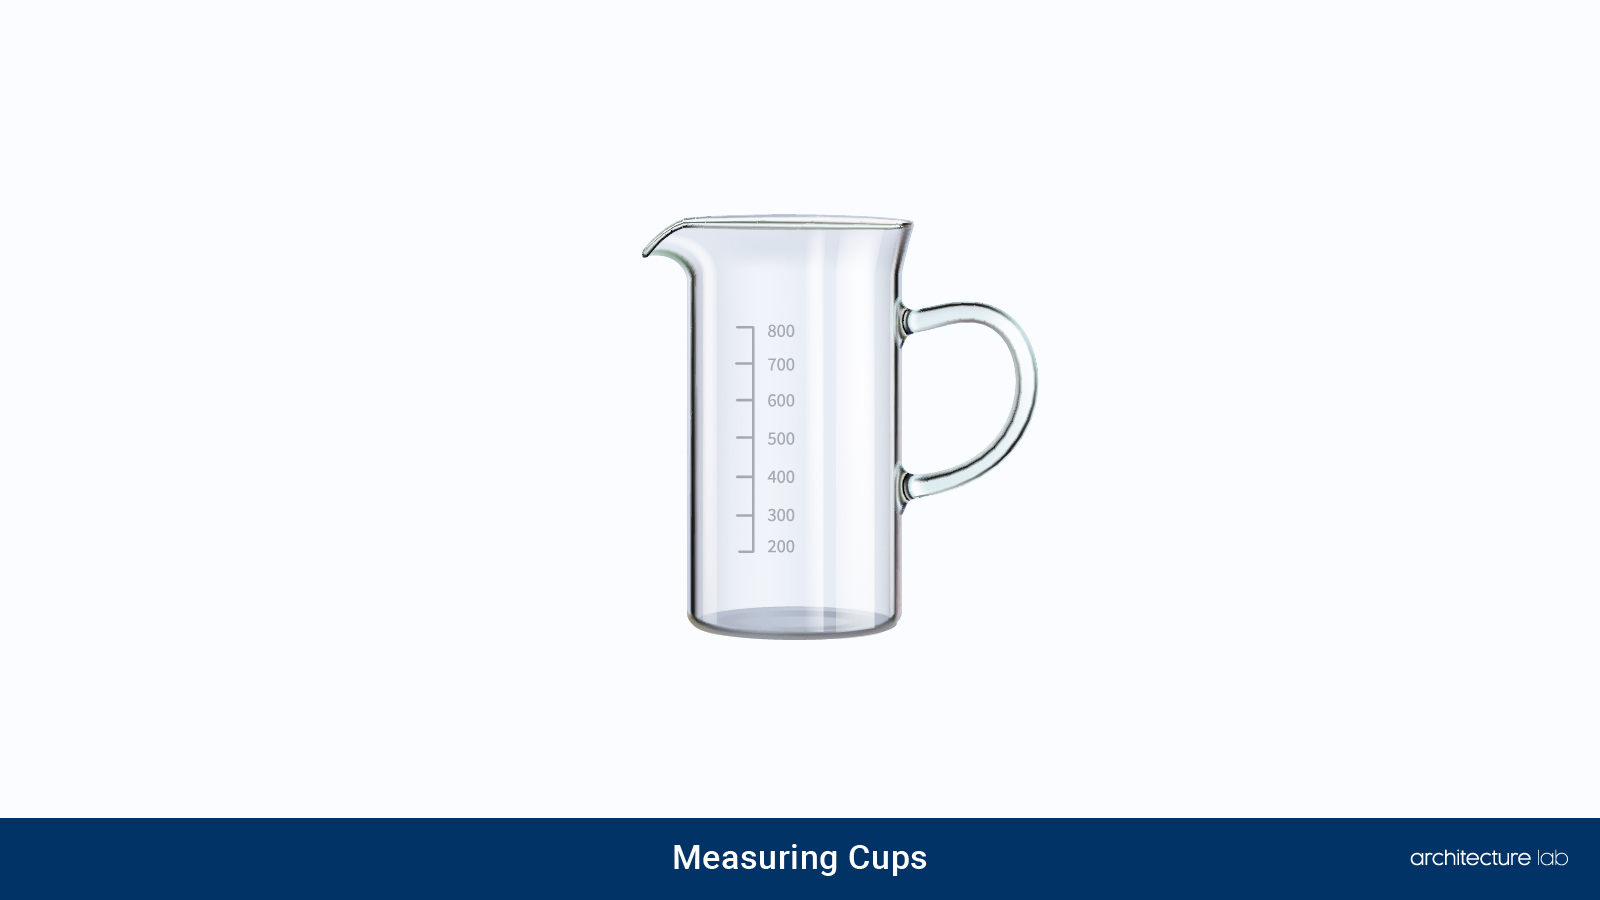 15. Measuring cups